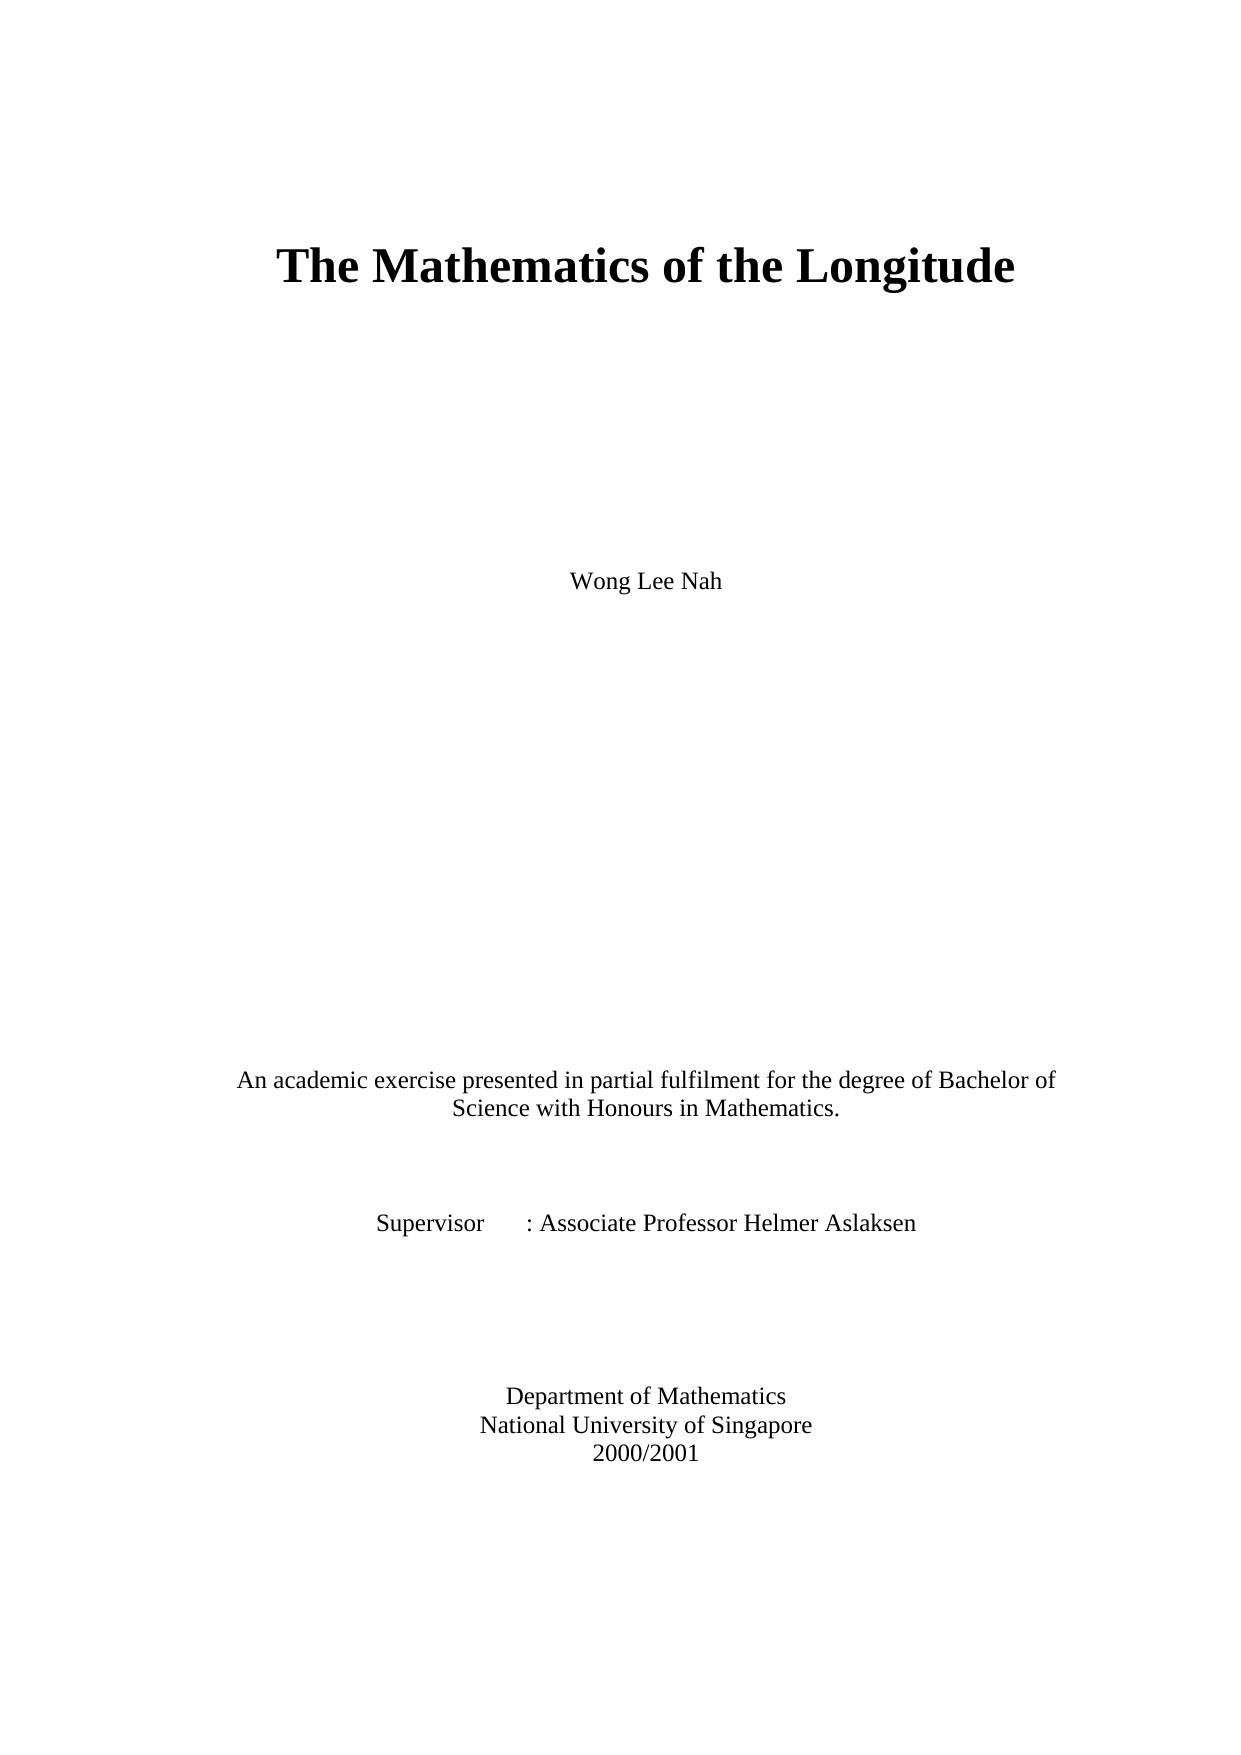 The Mathematics of the Longitude by HP Authorized Customer